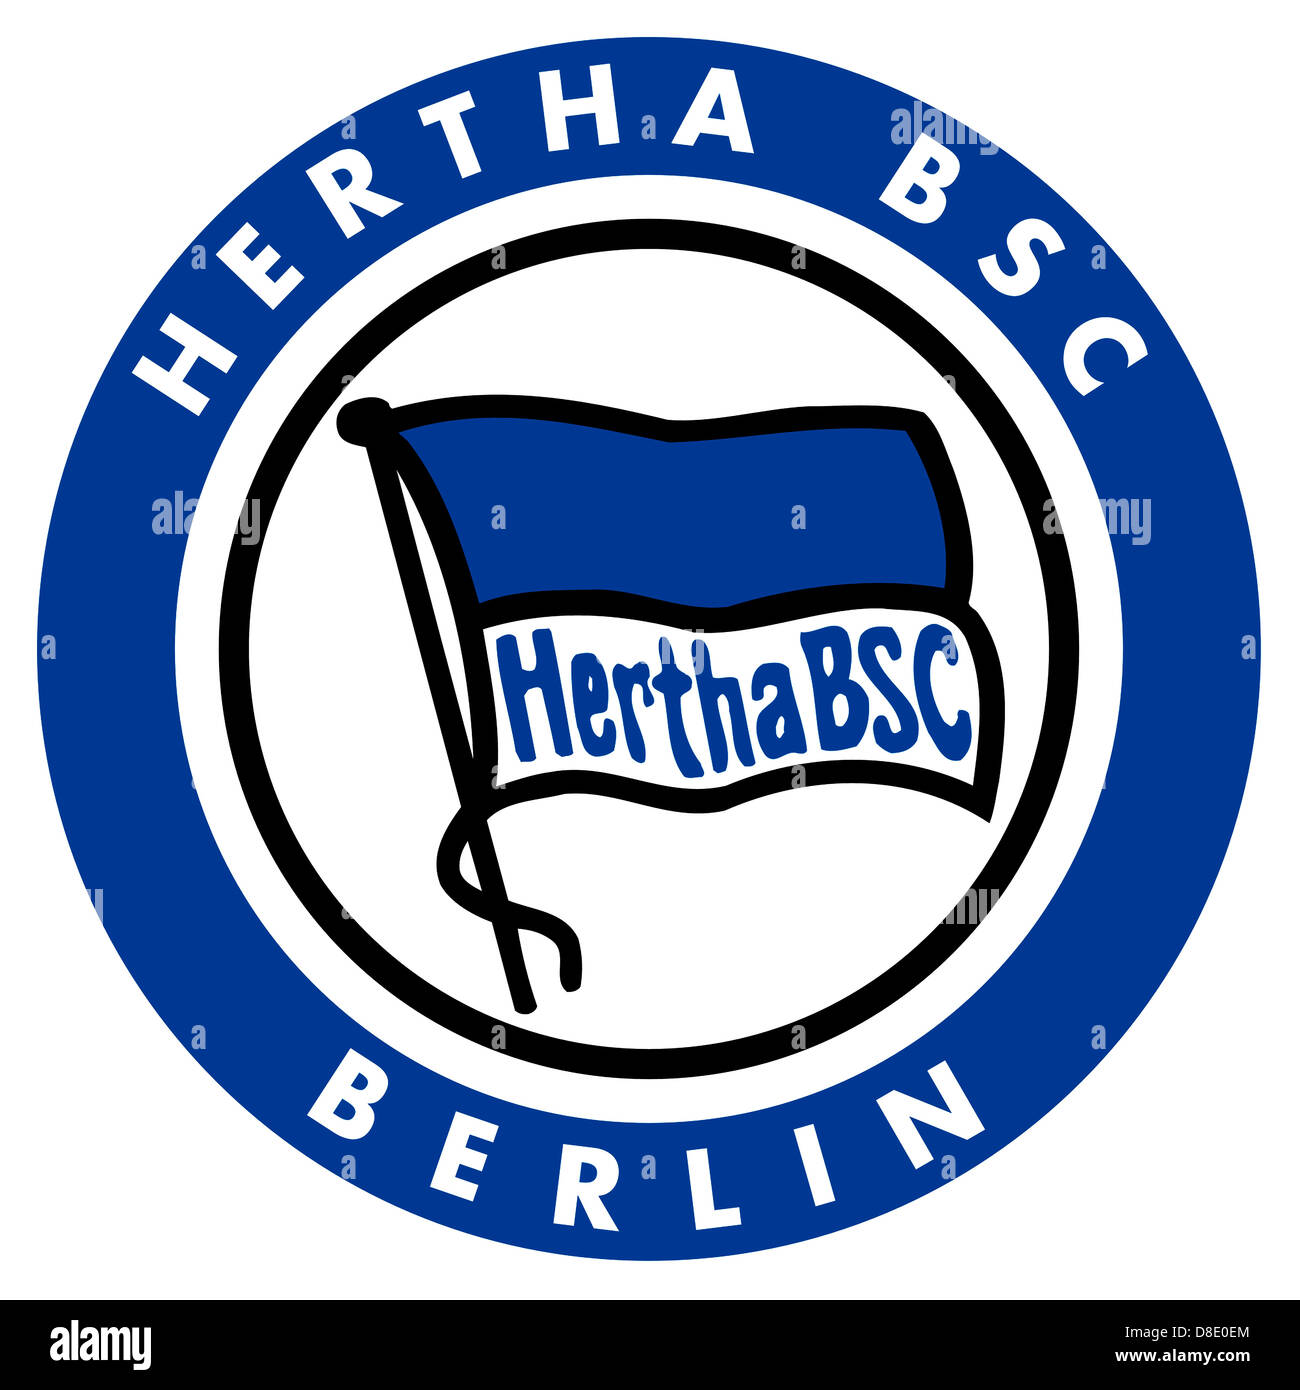 Logo de l'équipe allemande de football Hertha BSC Berlin. Banque D'Images